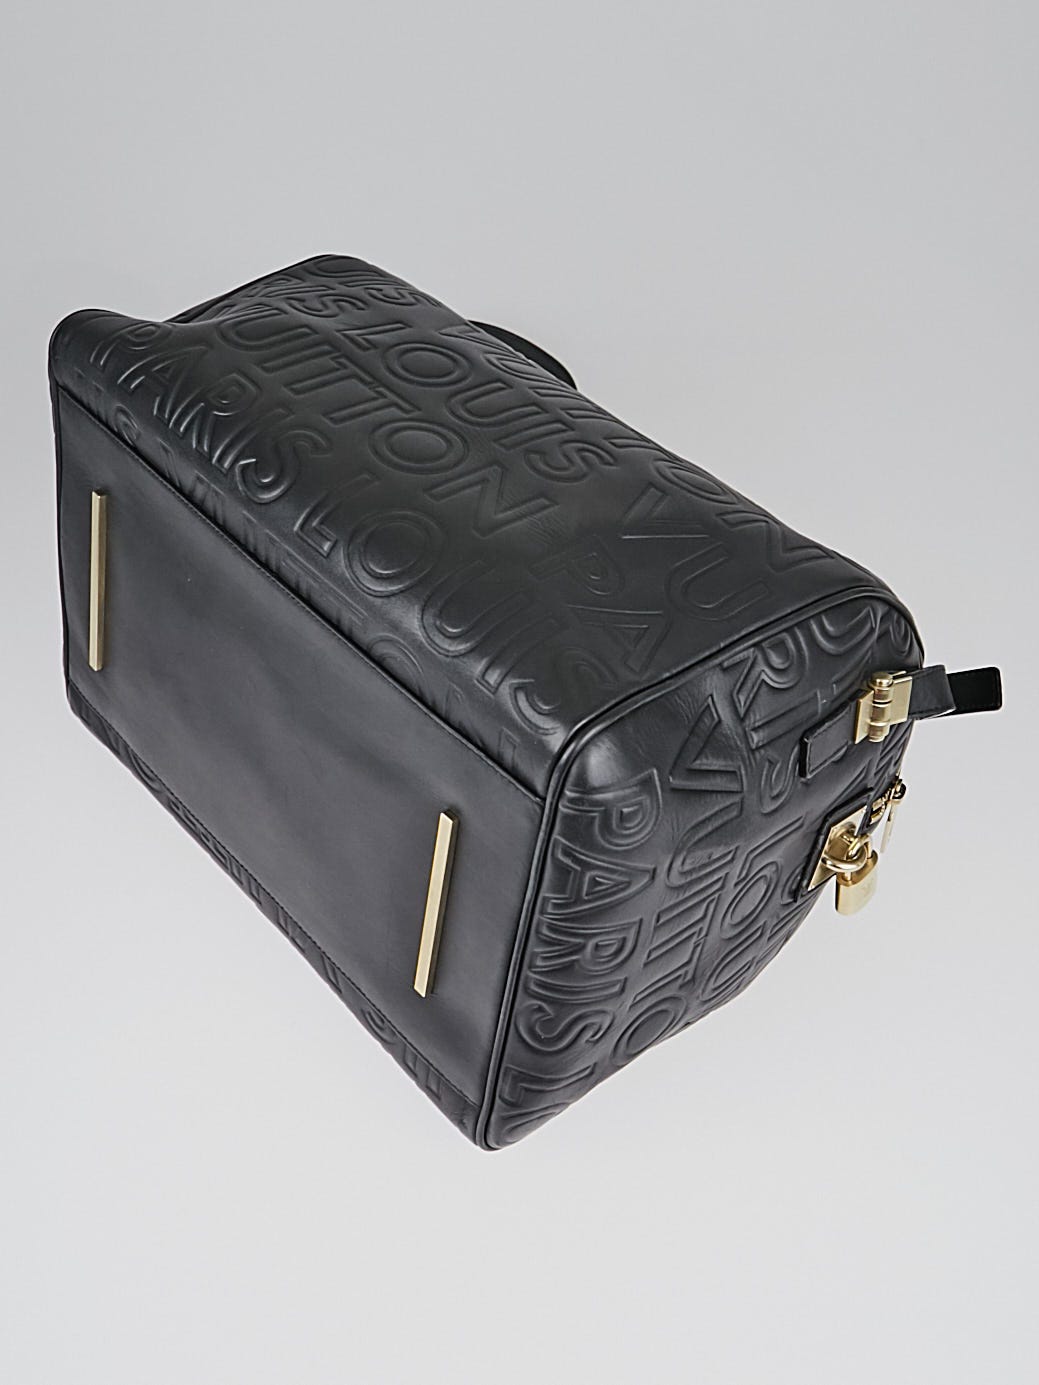 Louis Vuitton Paris Speedy Cube Bag Embossed Leather 30 Black 1329337